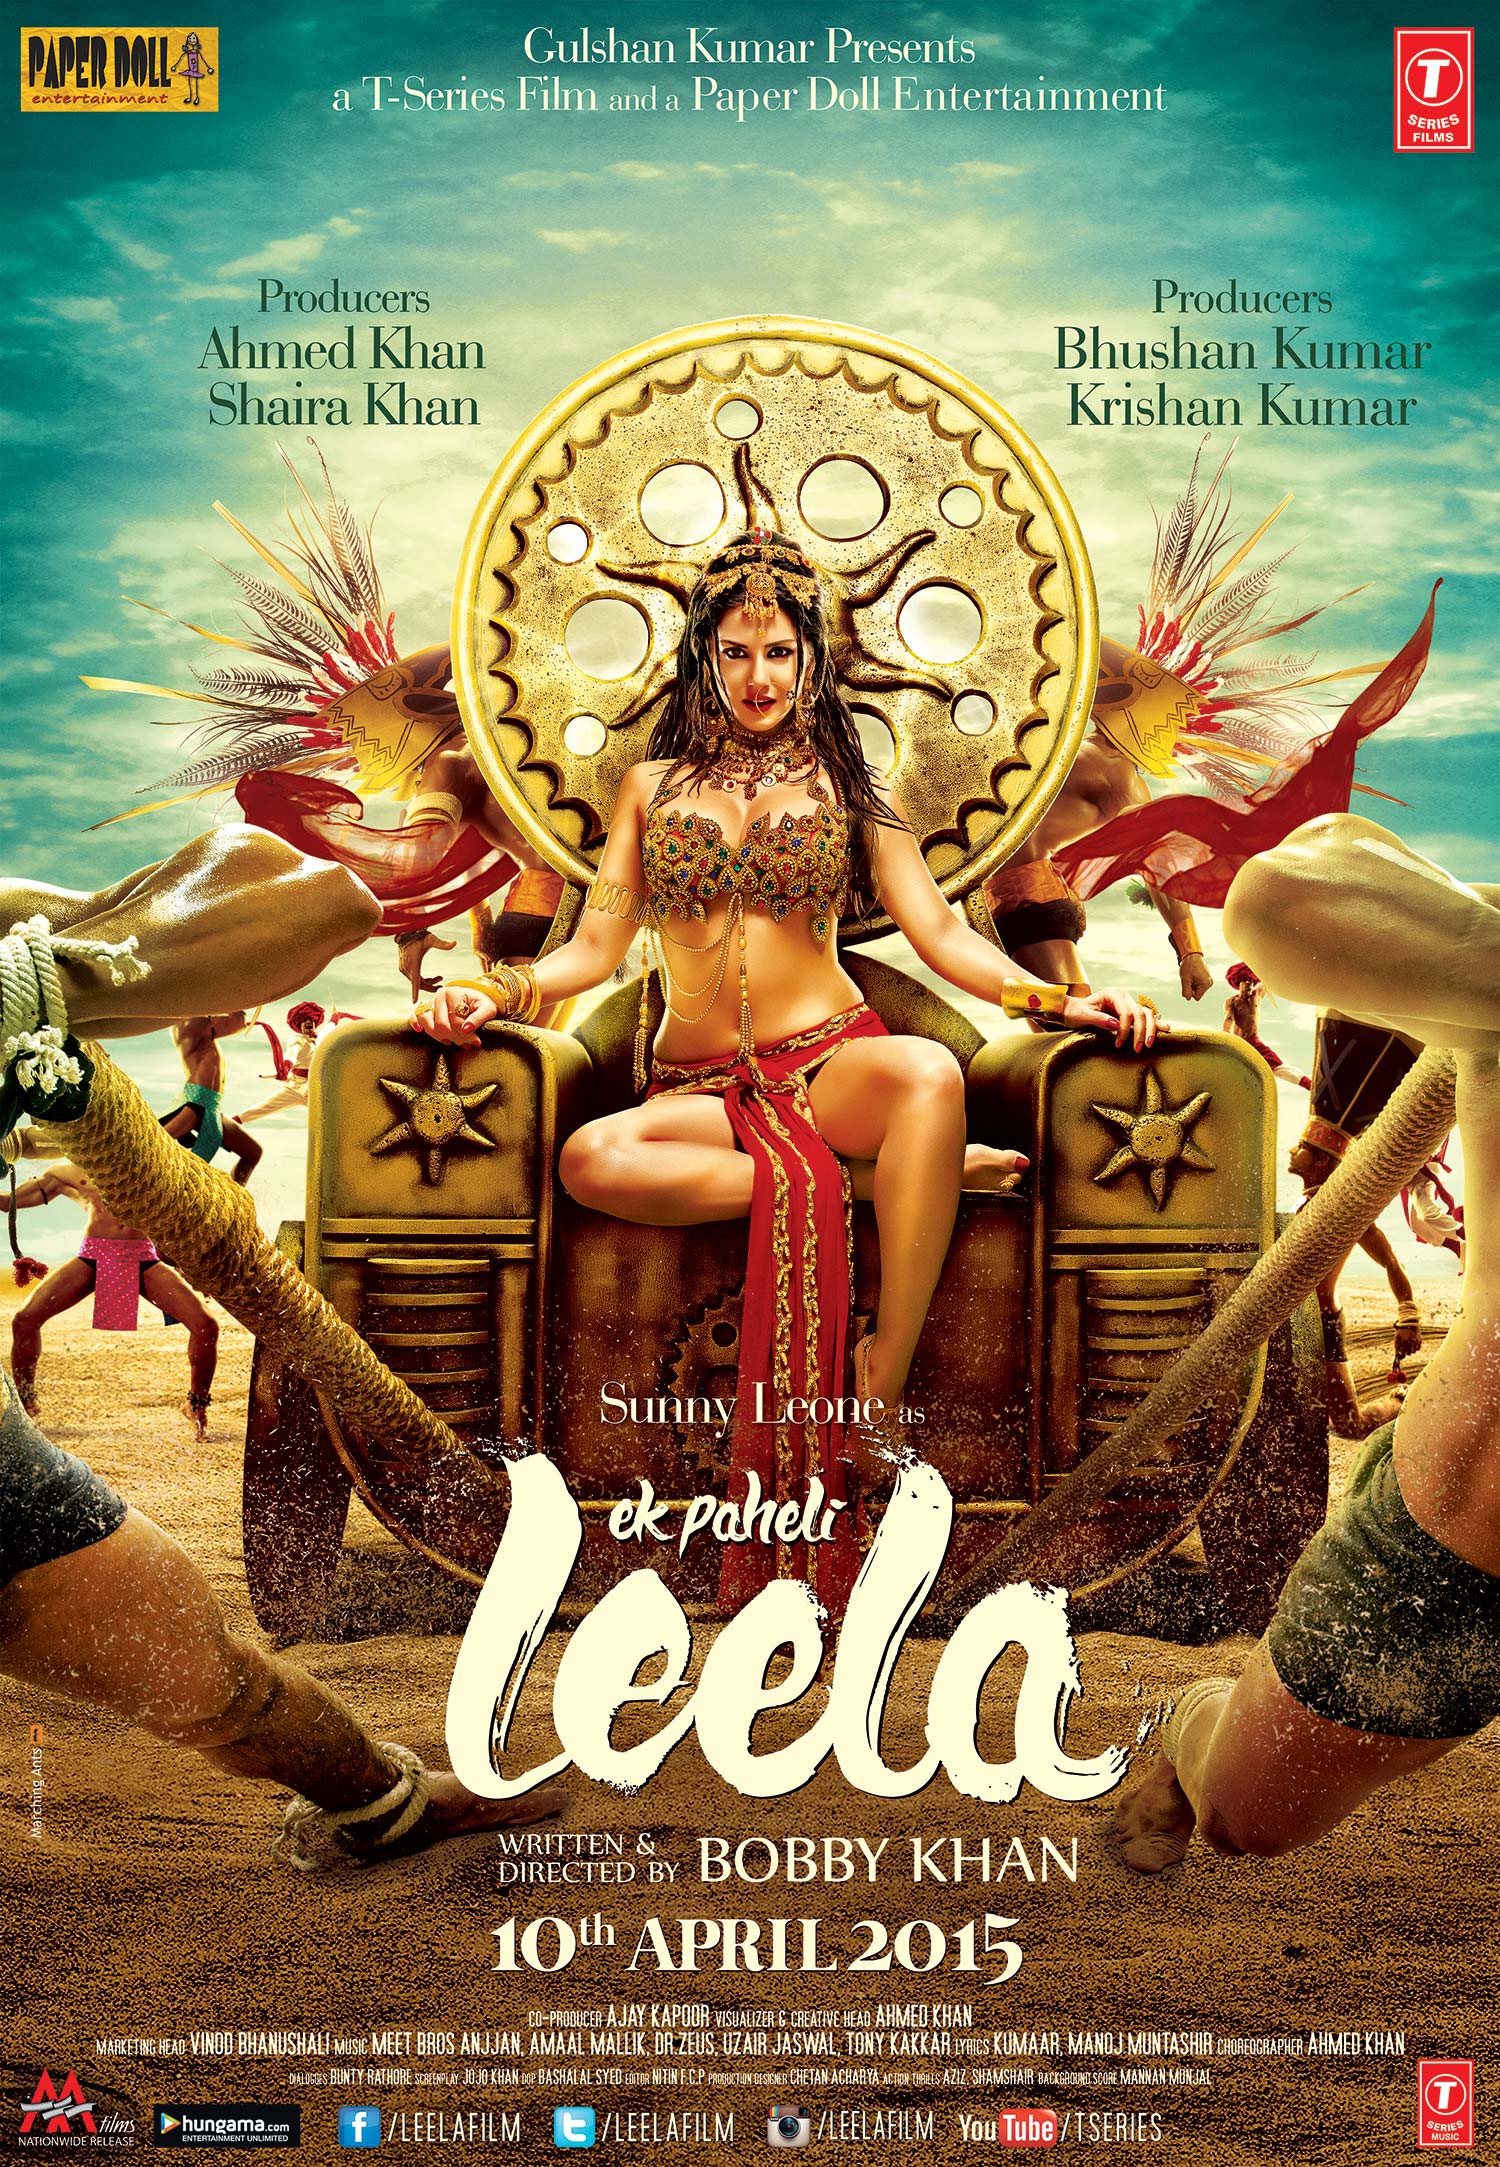 Mega Sized Movie Poster Image for Ek Paheli Leela (#1 of 4)